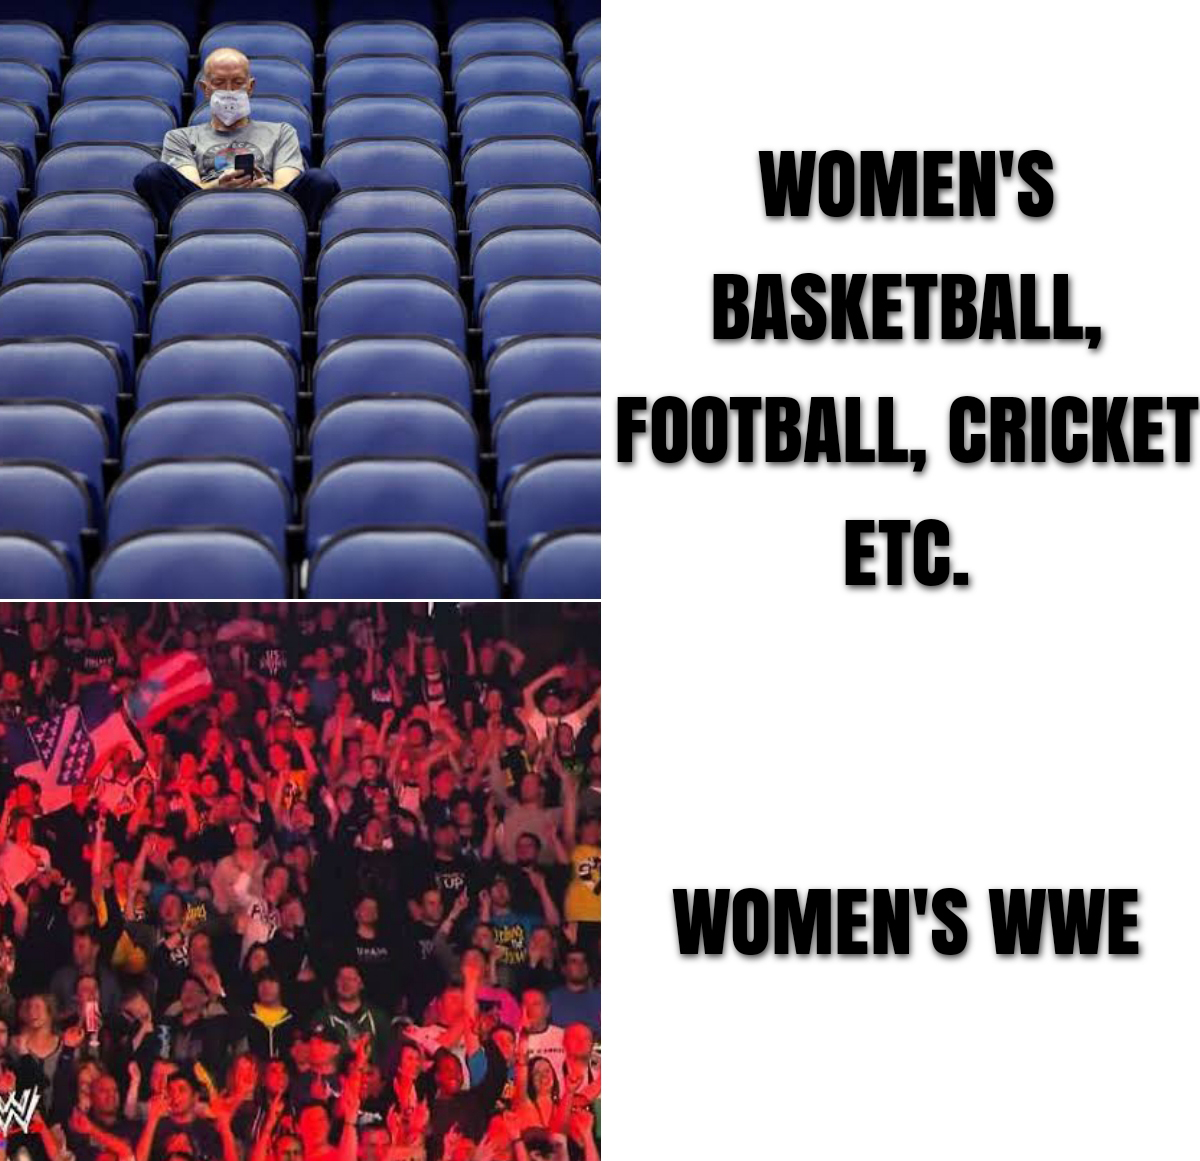 blue empty stands football - Women'S Basketball, Football, Cricket Etc. Women'S Wwe N